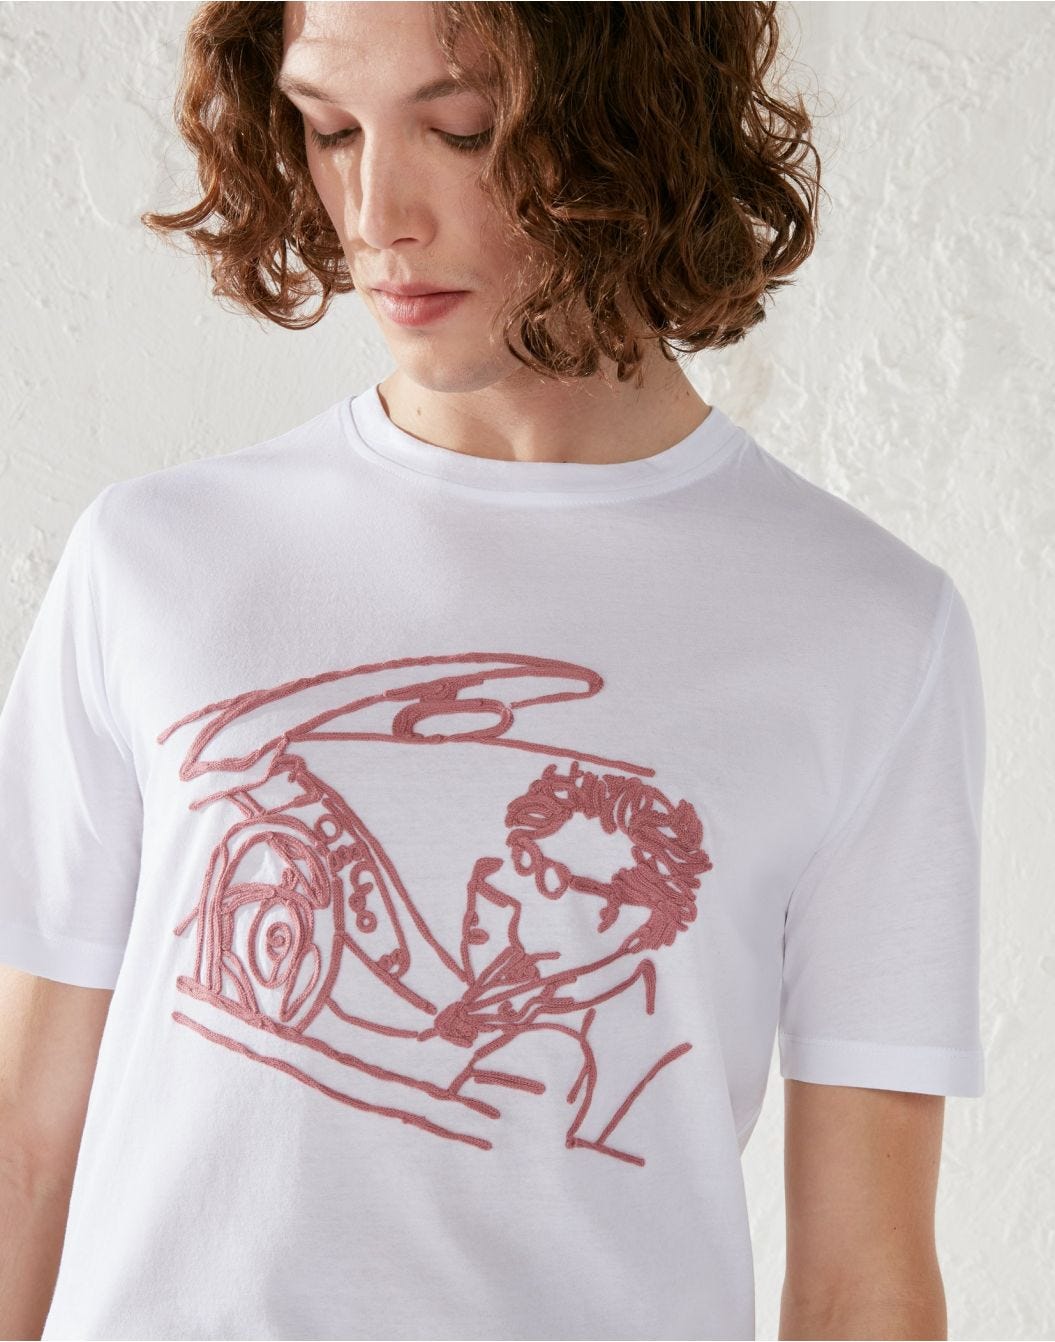 T-shirt with contrasting embroidery - Luigi Lardini capsule